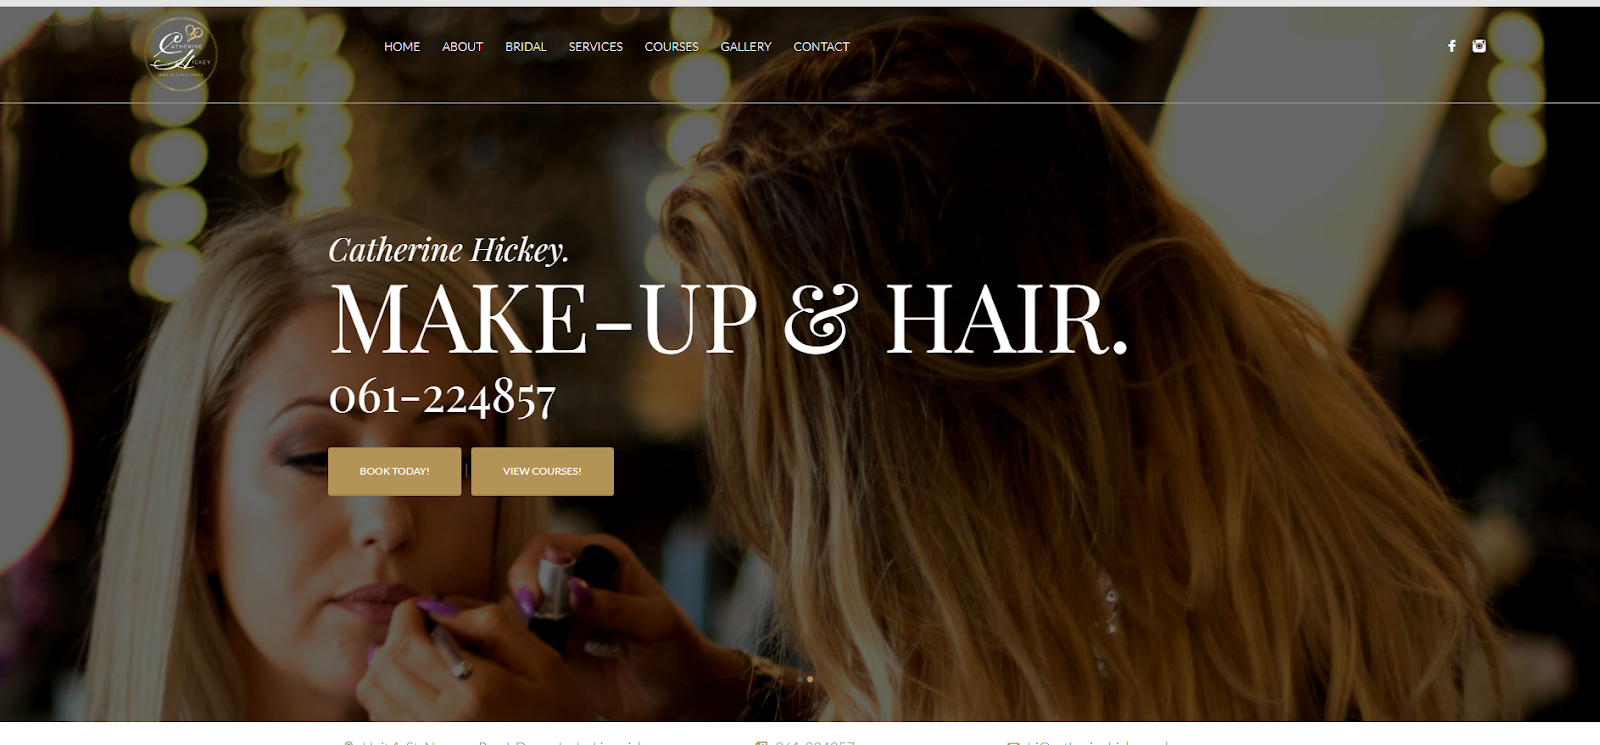 makeup artist website, Catherine Hickey